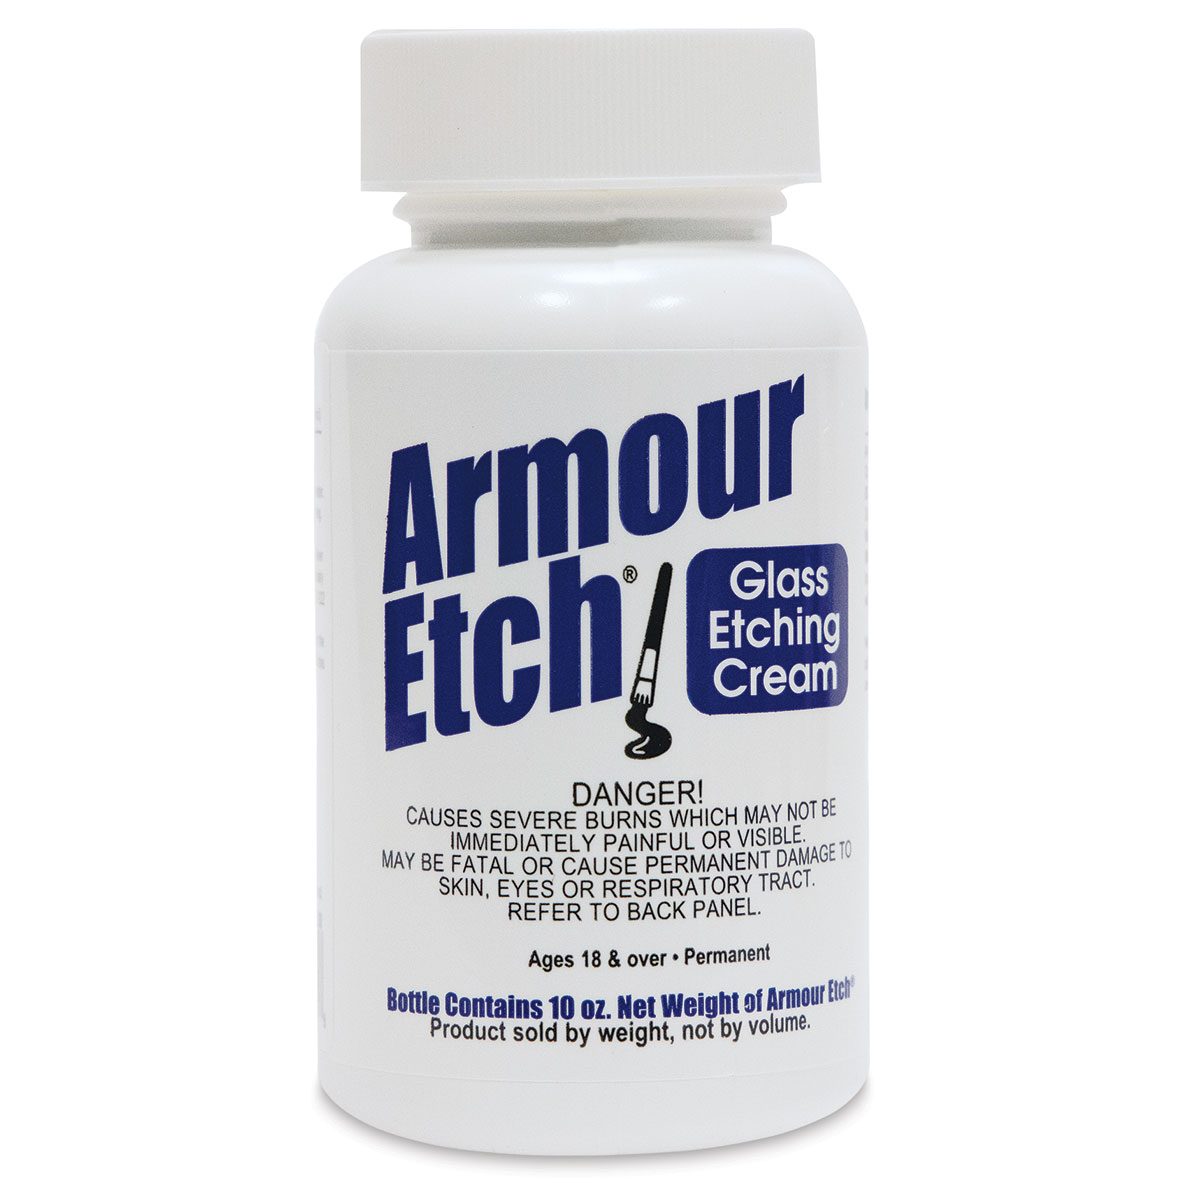 Armour Etch Cream Brand's Information